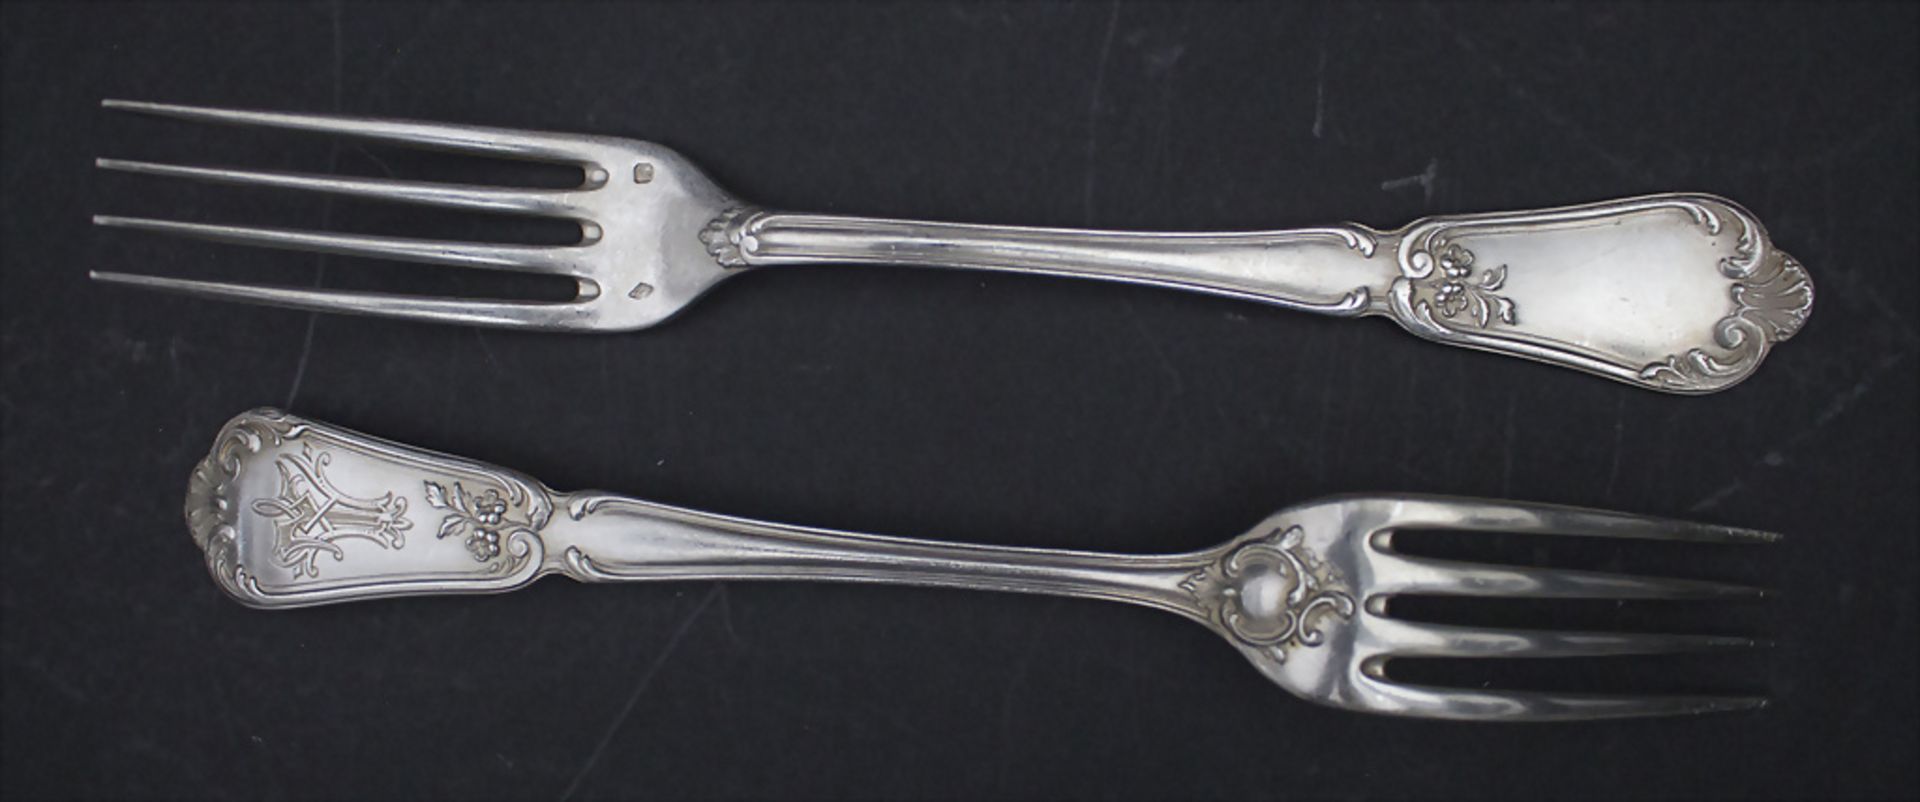 36 tlg. Besteck / A 36-piece set of silver cutlery, Hènin & Cie, Paris, um 1870 - Image 3 of 8